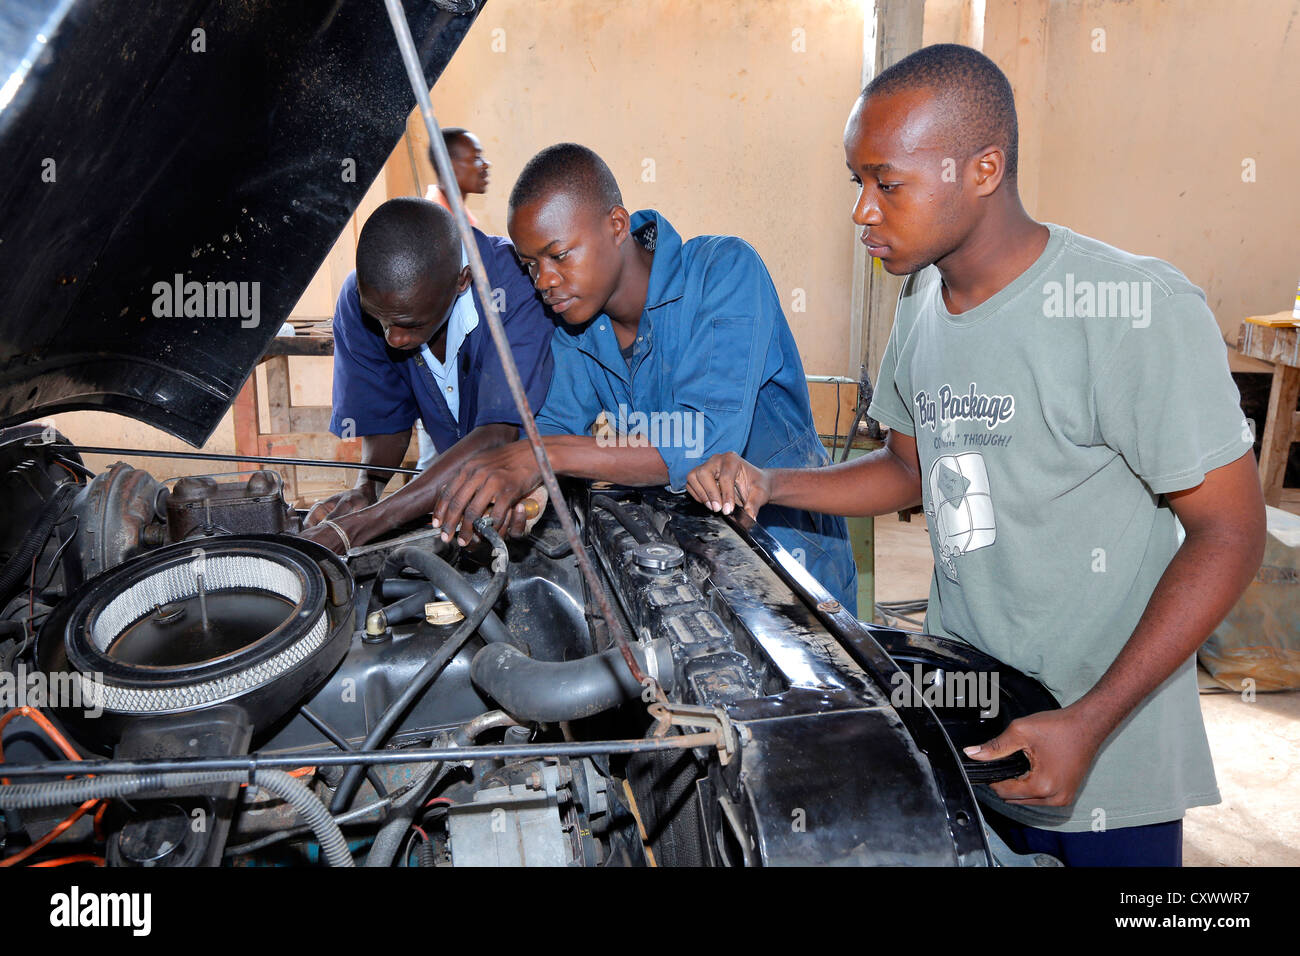 young mechanics works on a car engine. Machui Vocational Center, Machui, Zanzibar, Tanzania Stock Photo